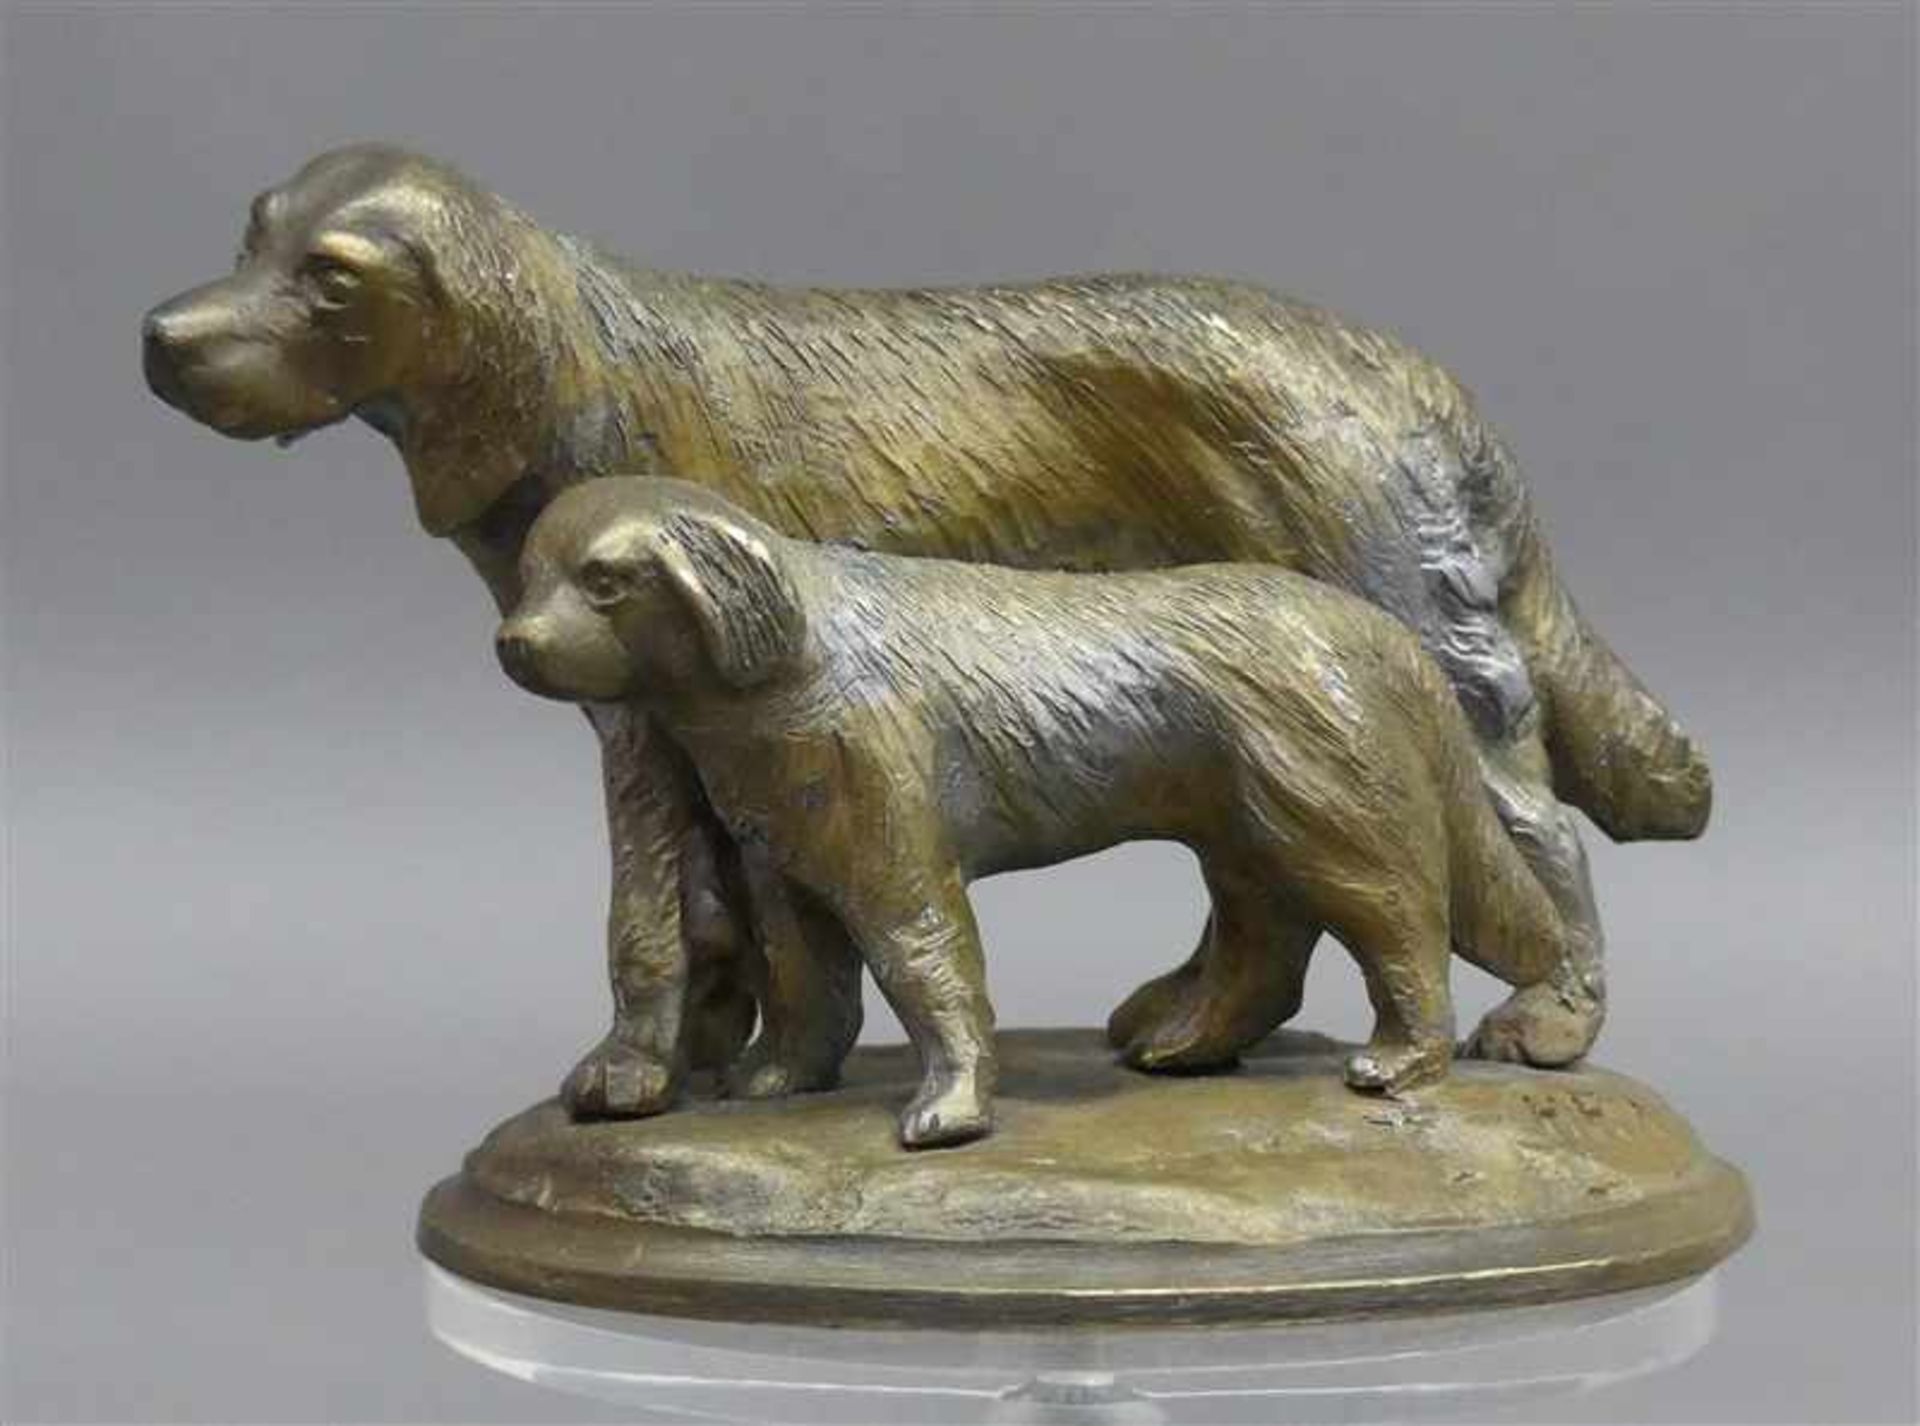 Metallskulptur Zinn, bronziert, "Hundepaar", auf Sockel, signiert, HAX, h 9 cm,- - -20.00 % buyer'